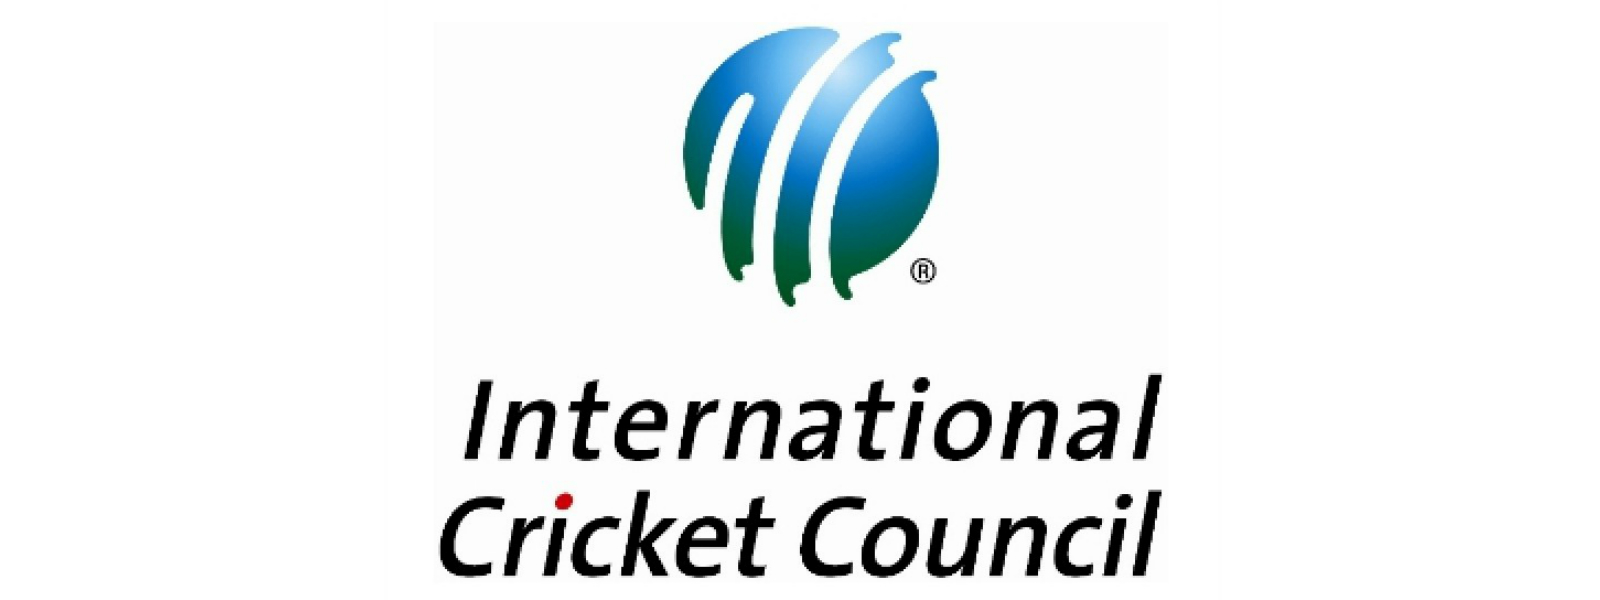 ICC to inquire into accusations against Sri Lanka